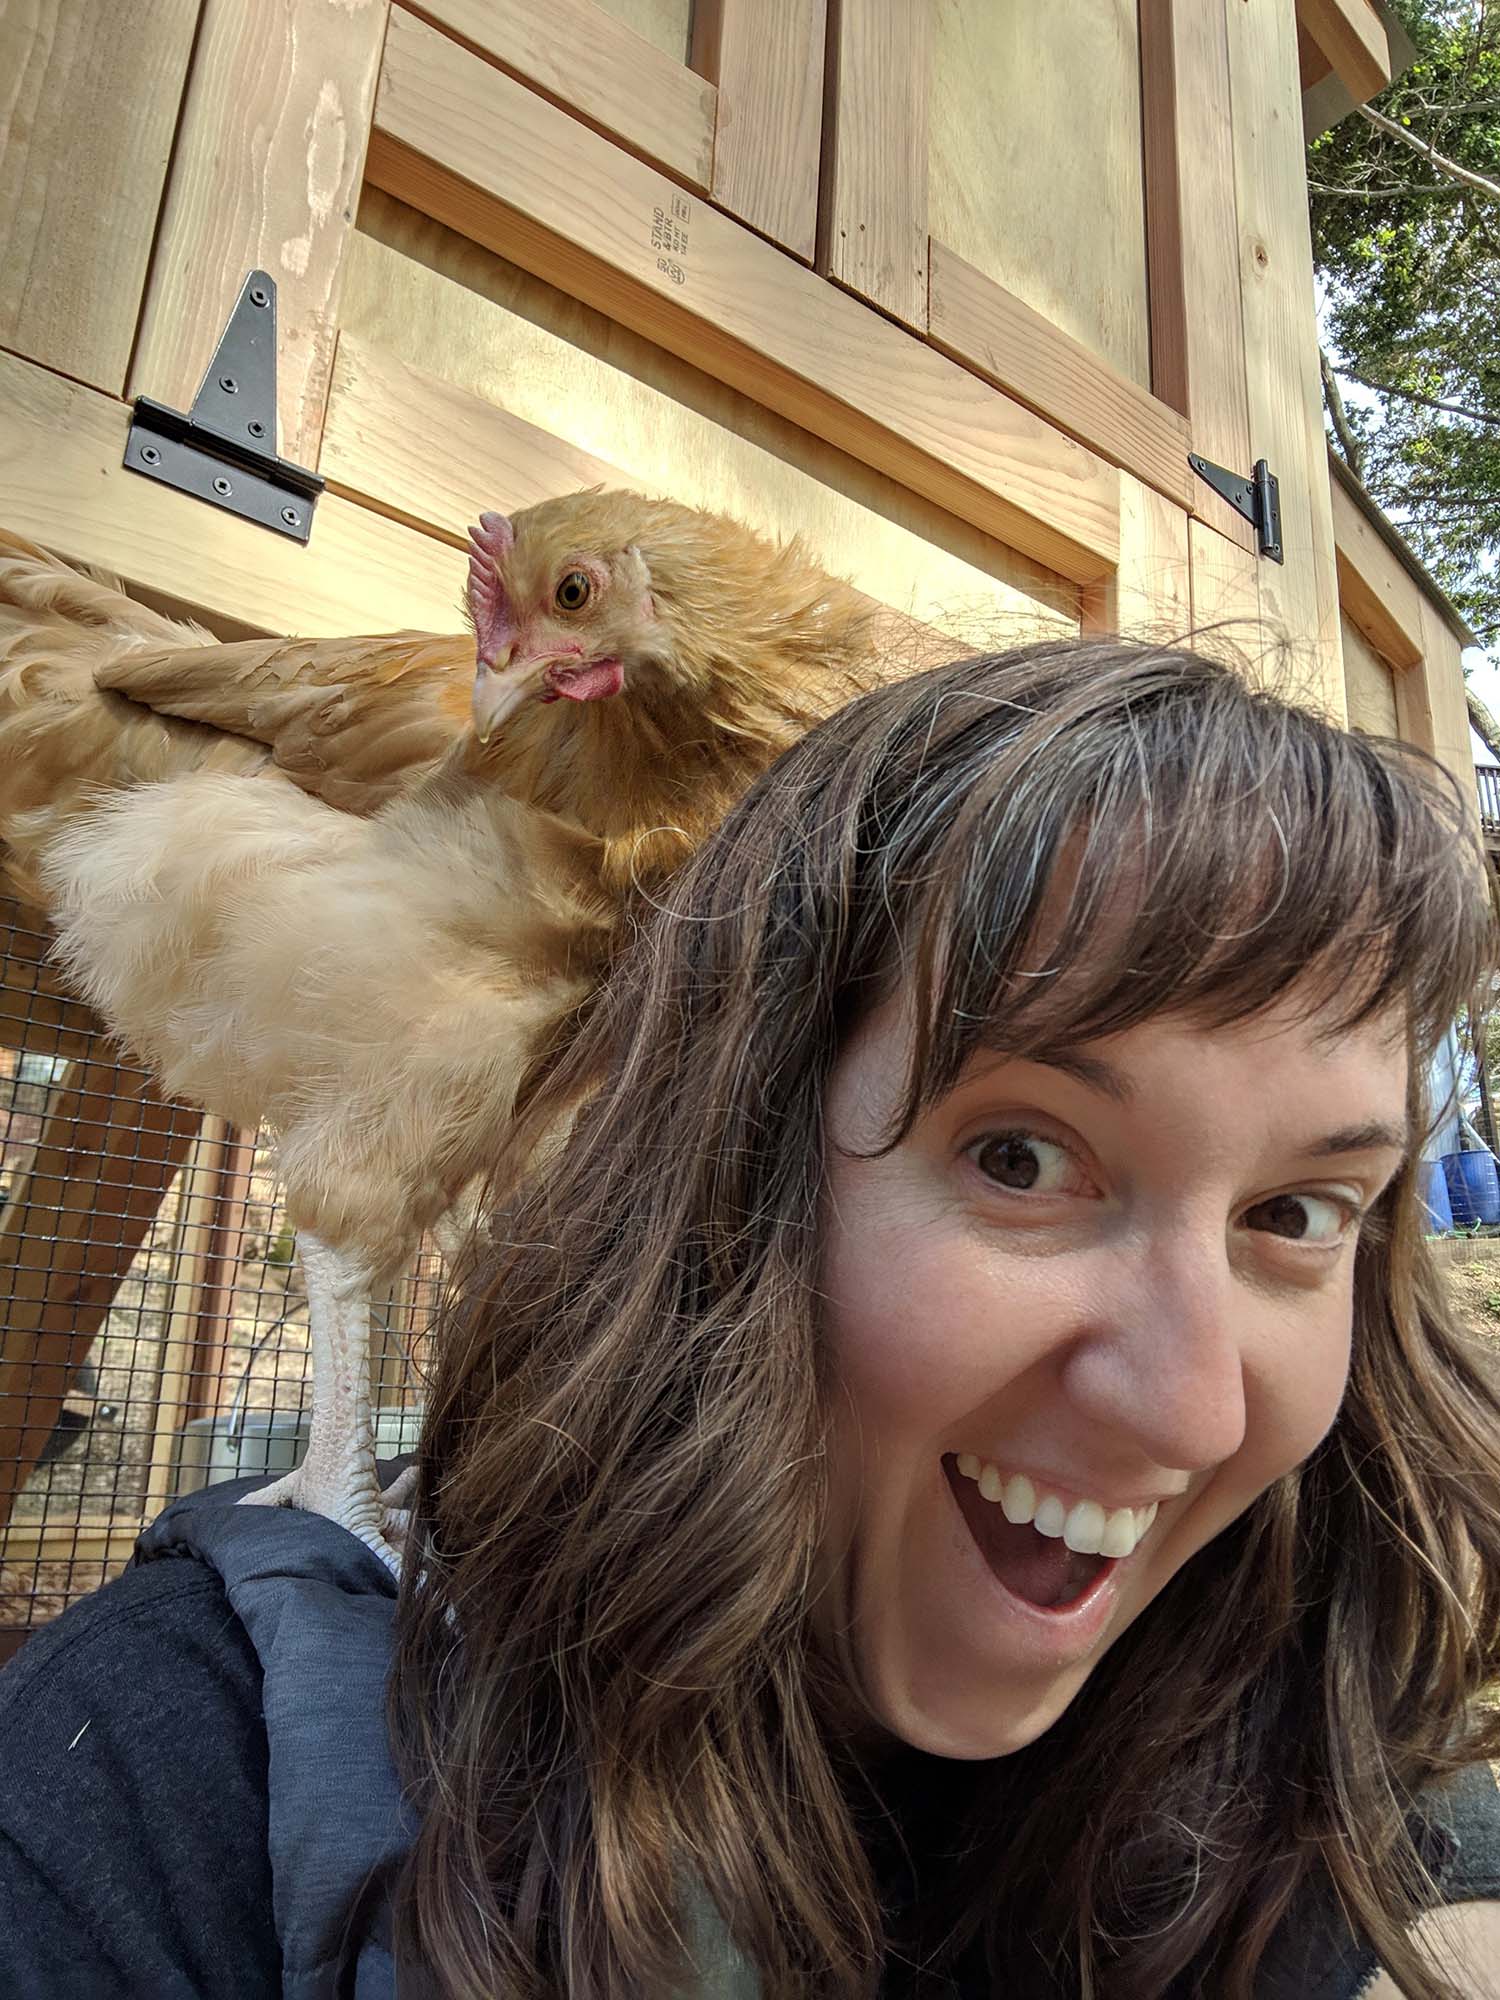 4′ x 9′ California Coop customer and her chicken enjoying their new coop in Santa Cruz, California